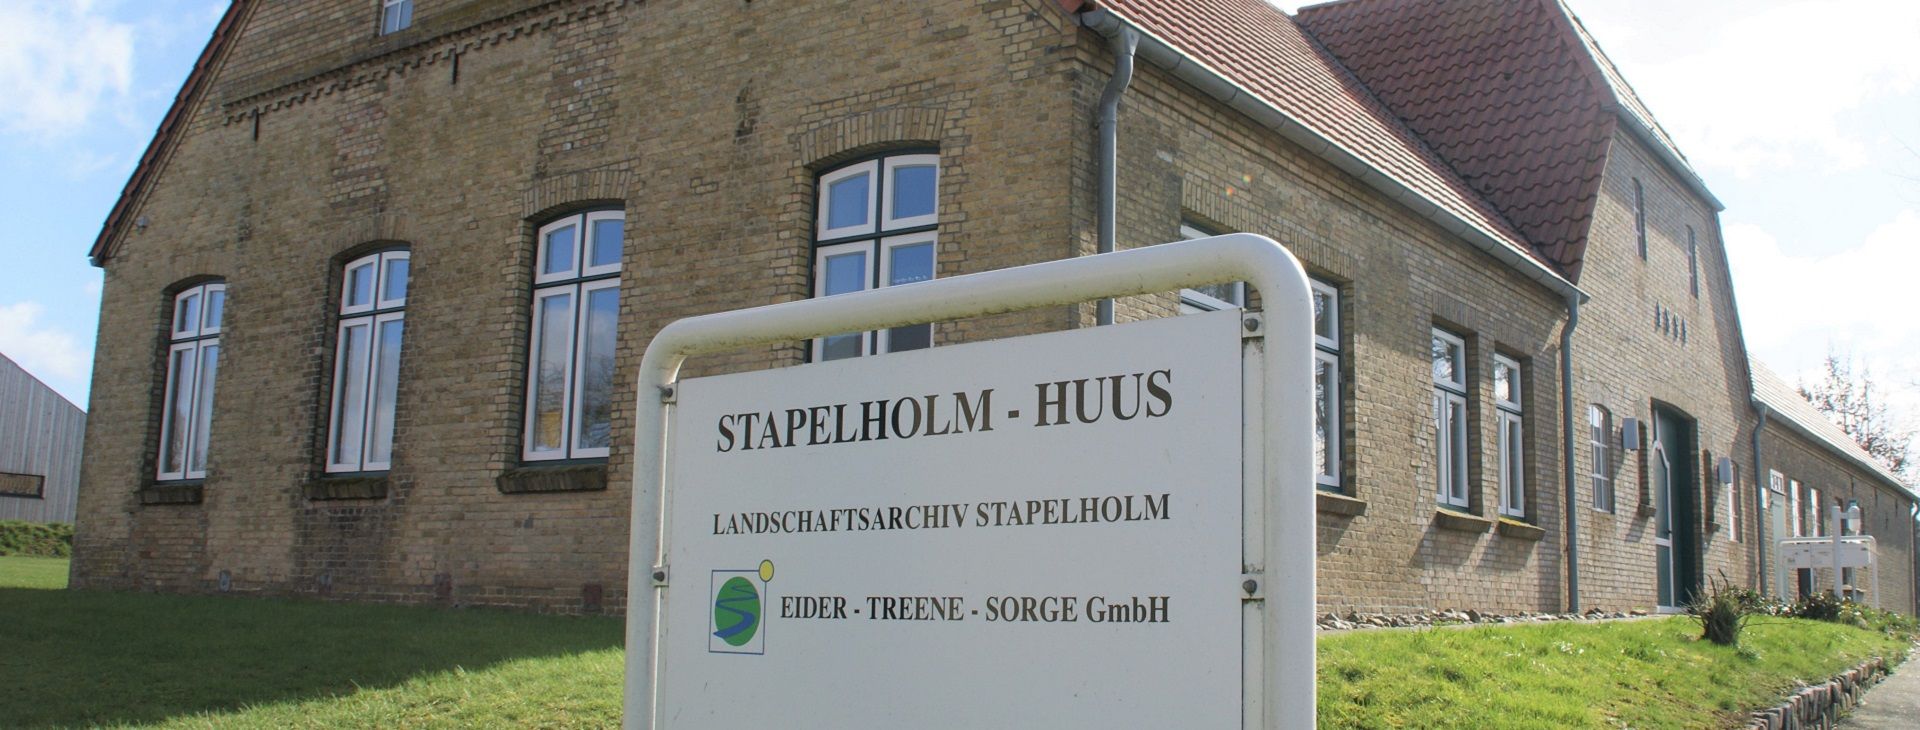 Stapelholm-Huus